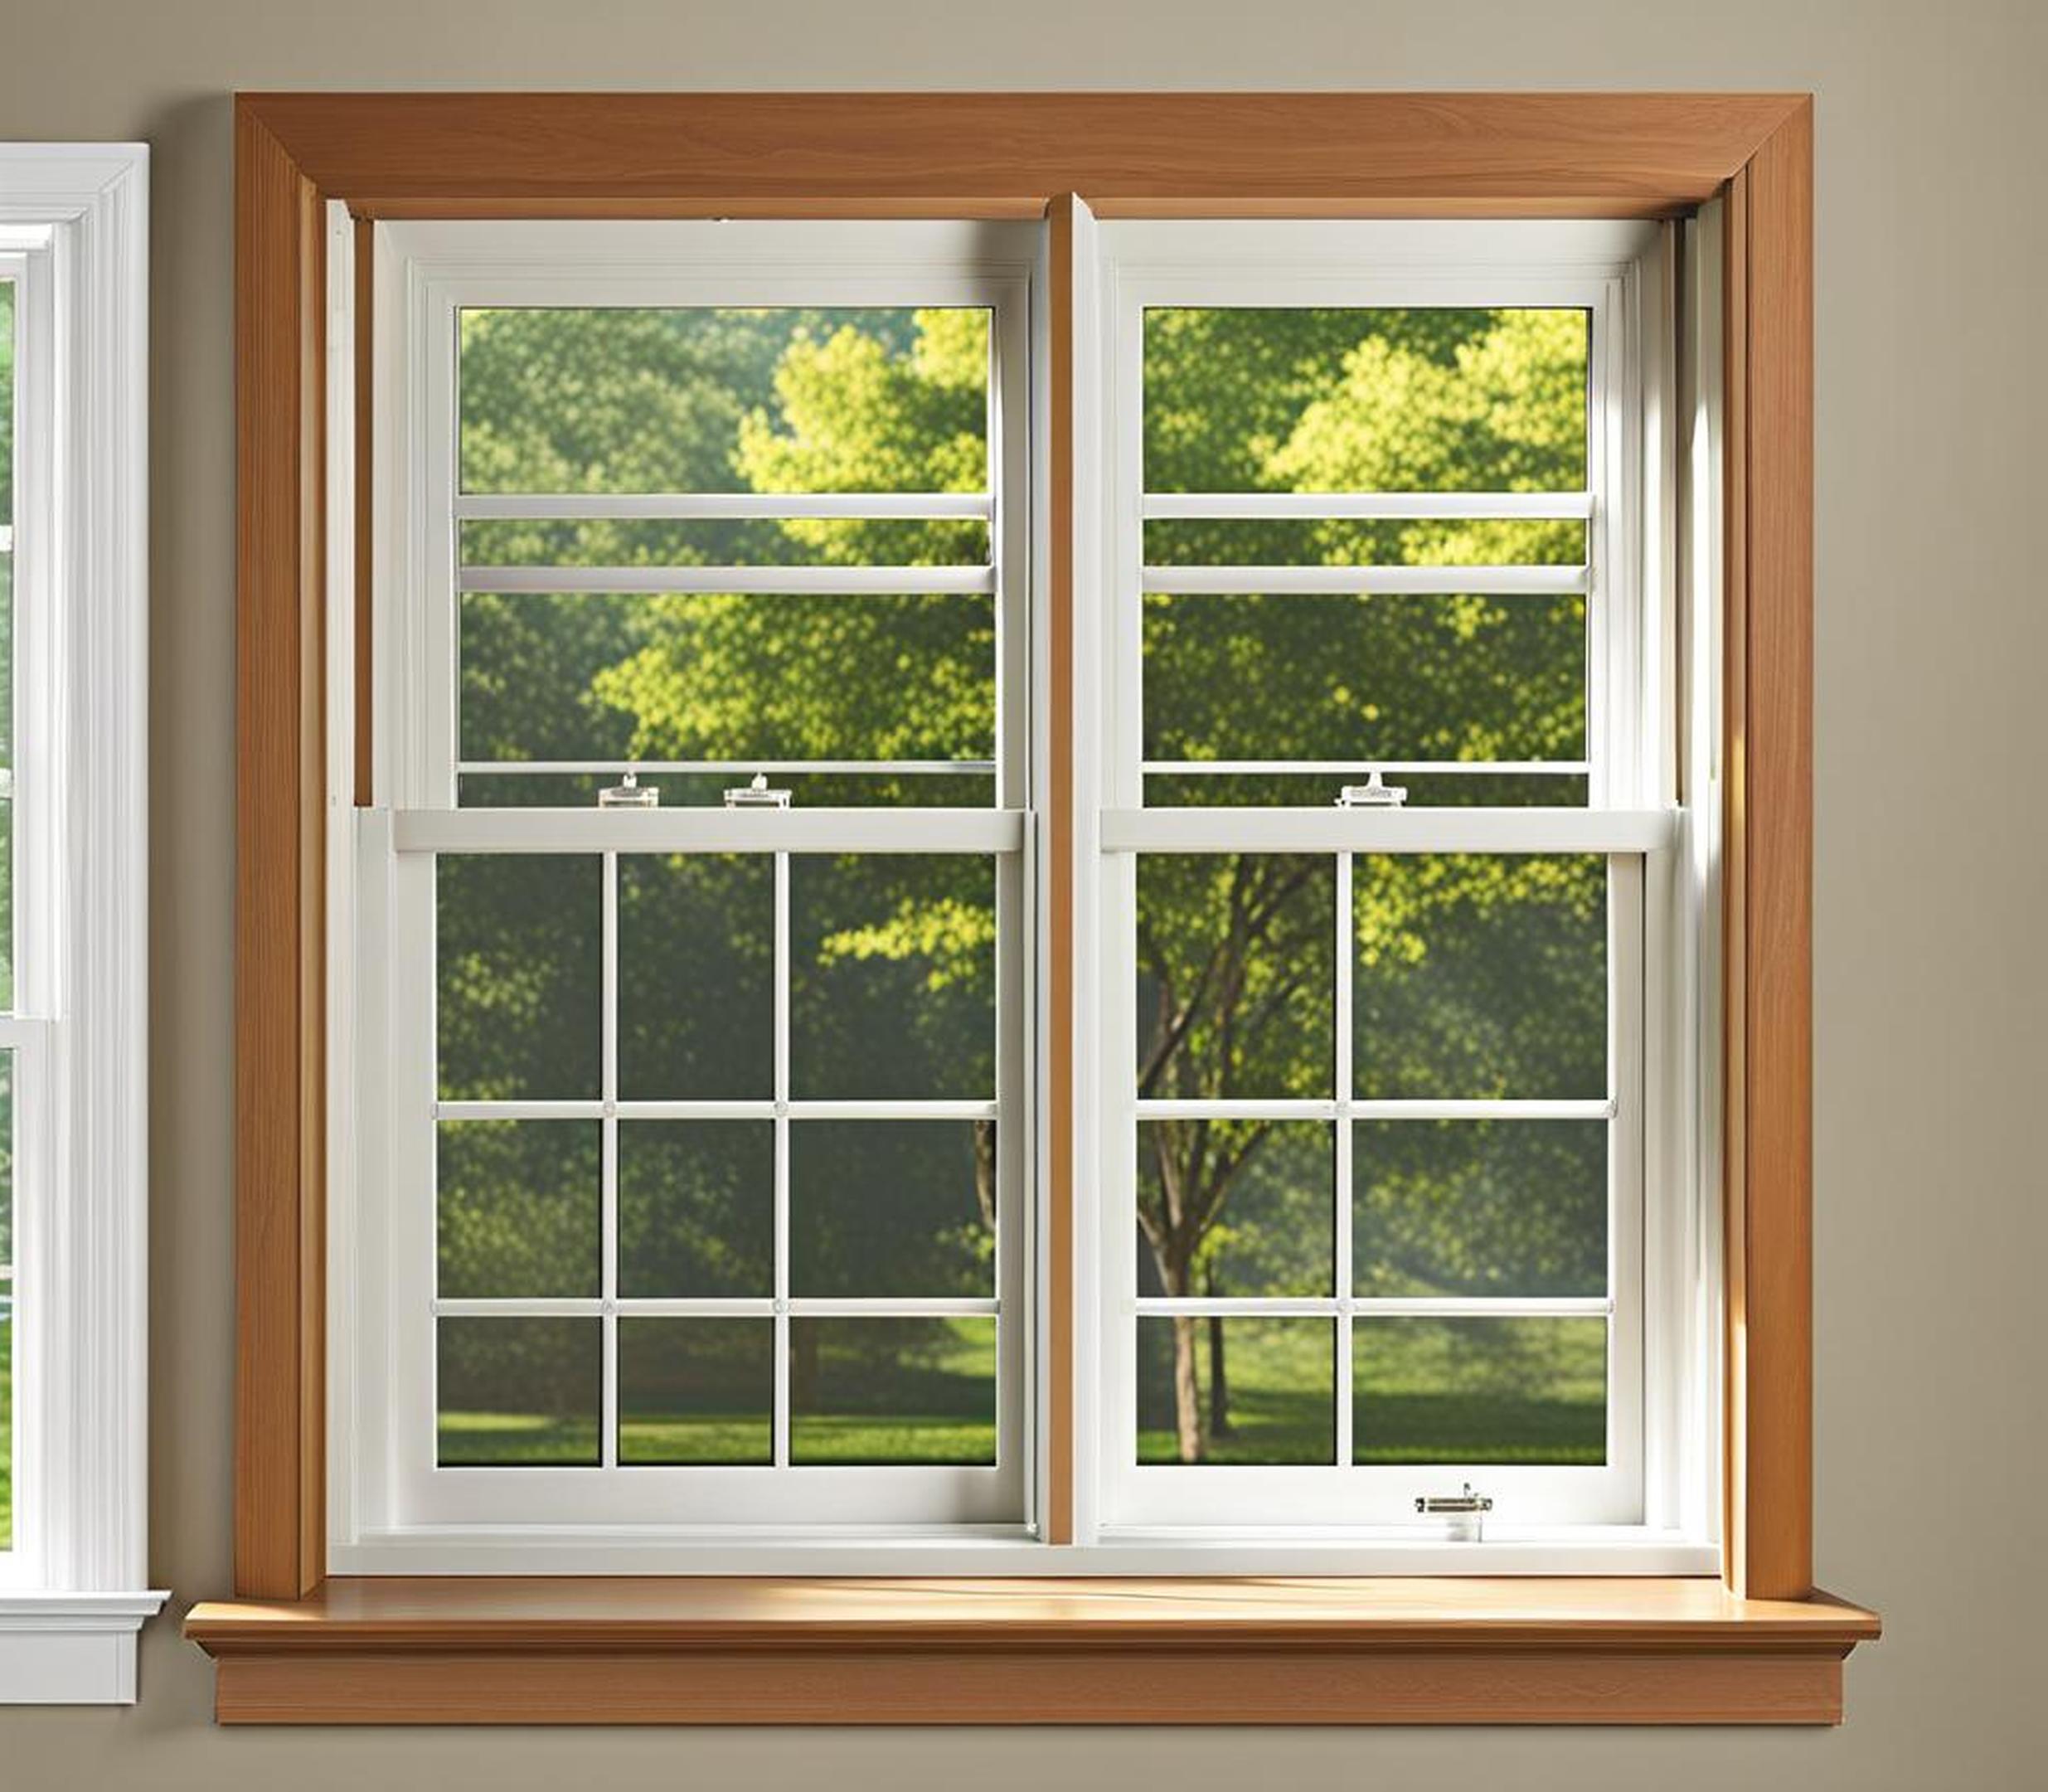 double hung window sizes chart